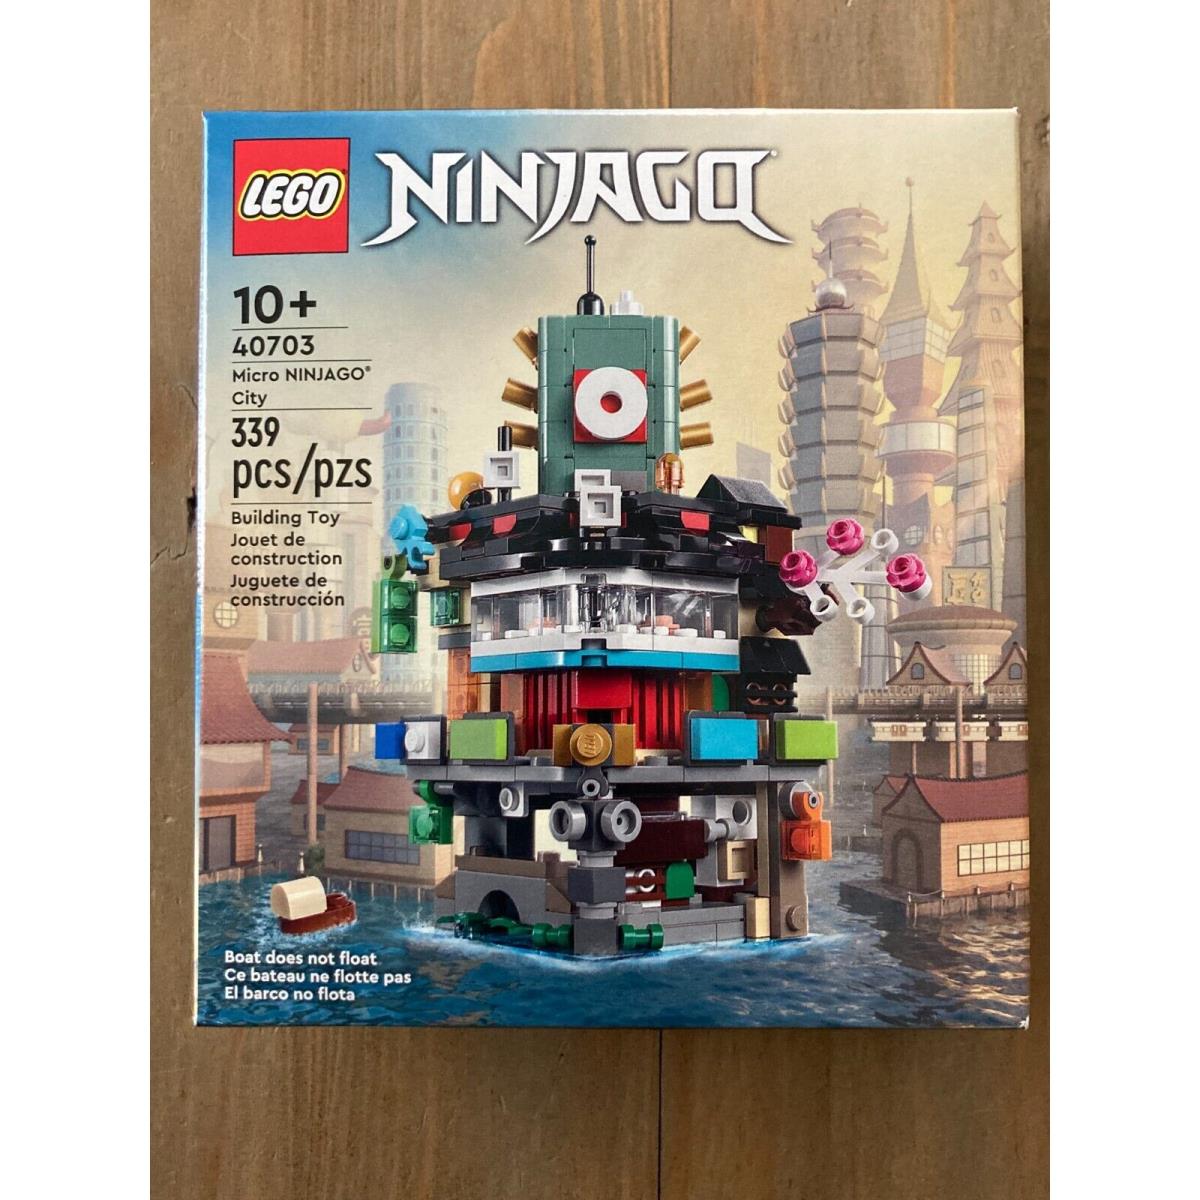 Lego 40703 Micro Ninjago City - Limited Edition Promo Set